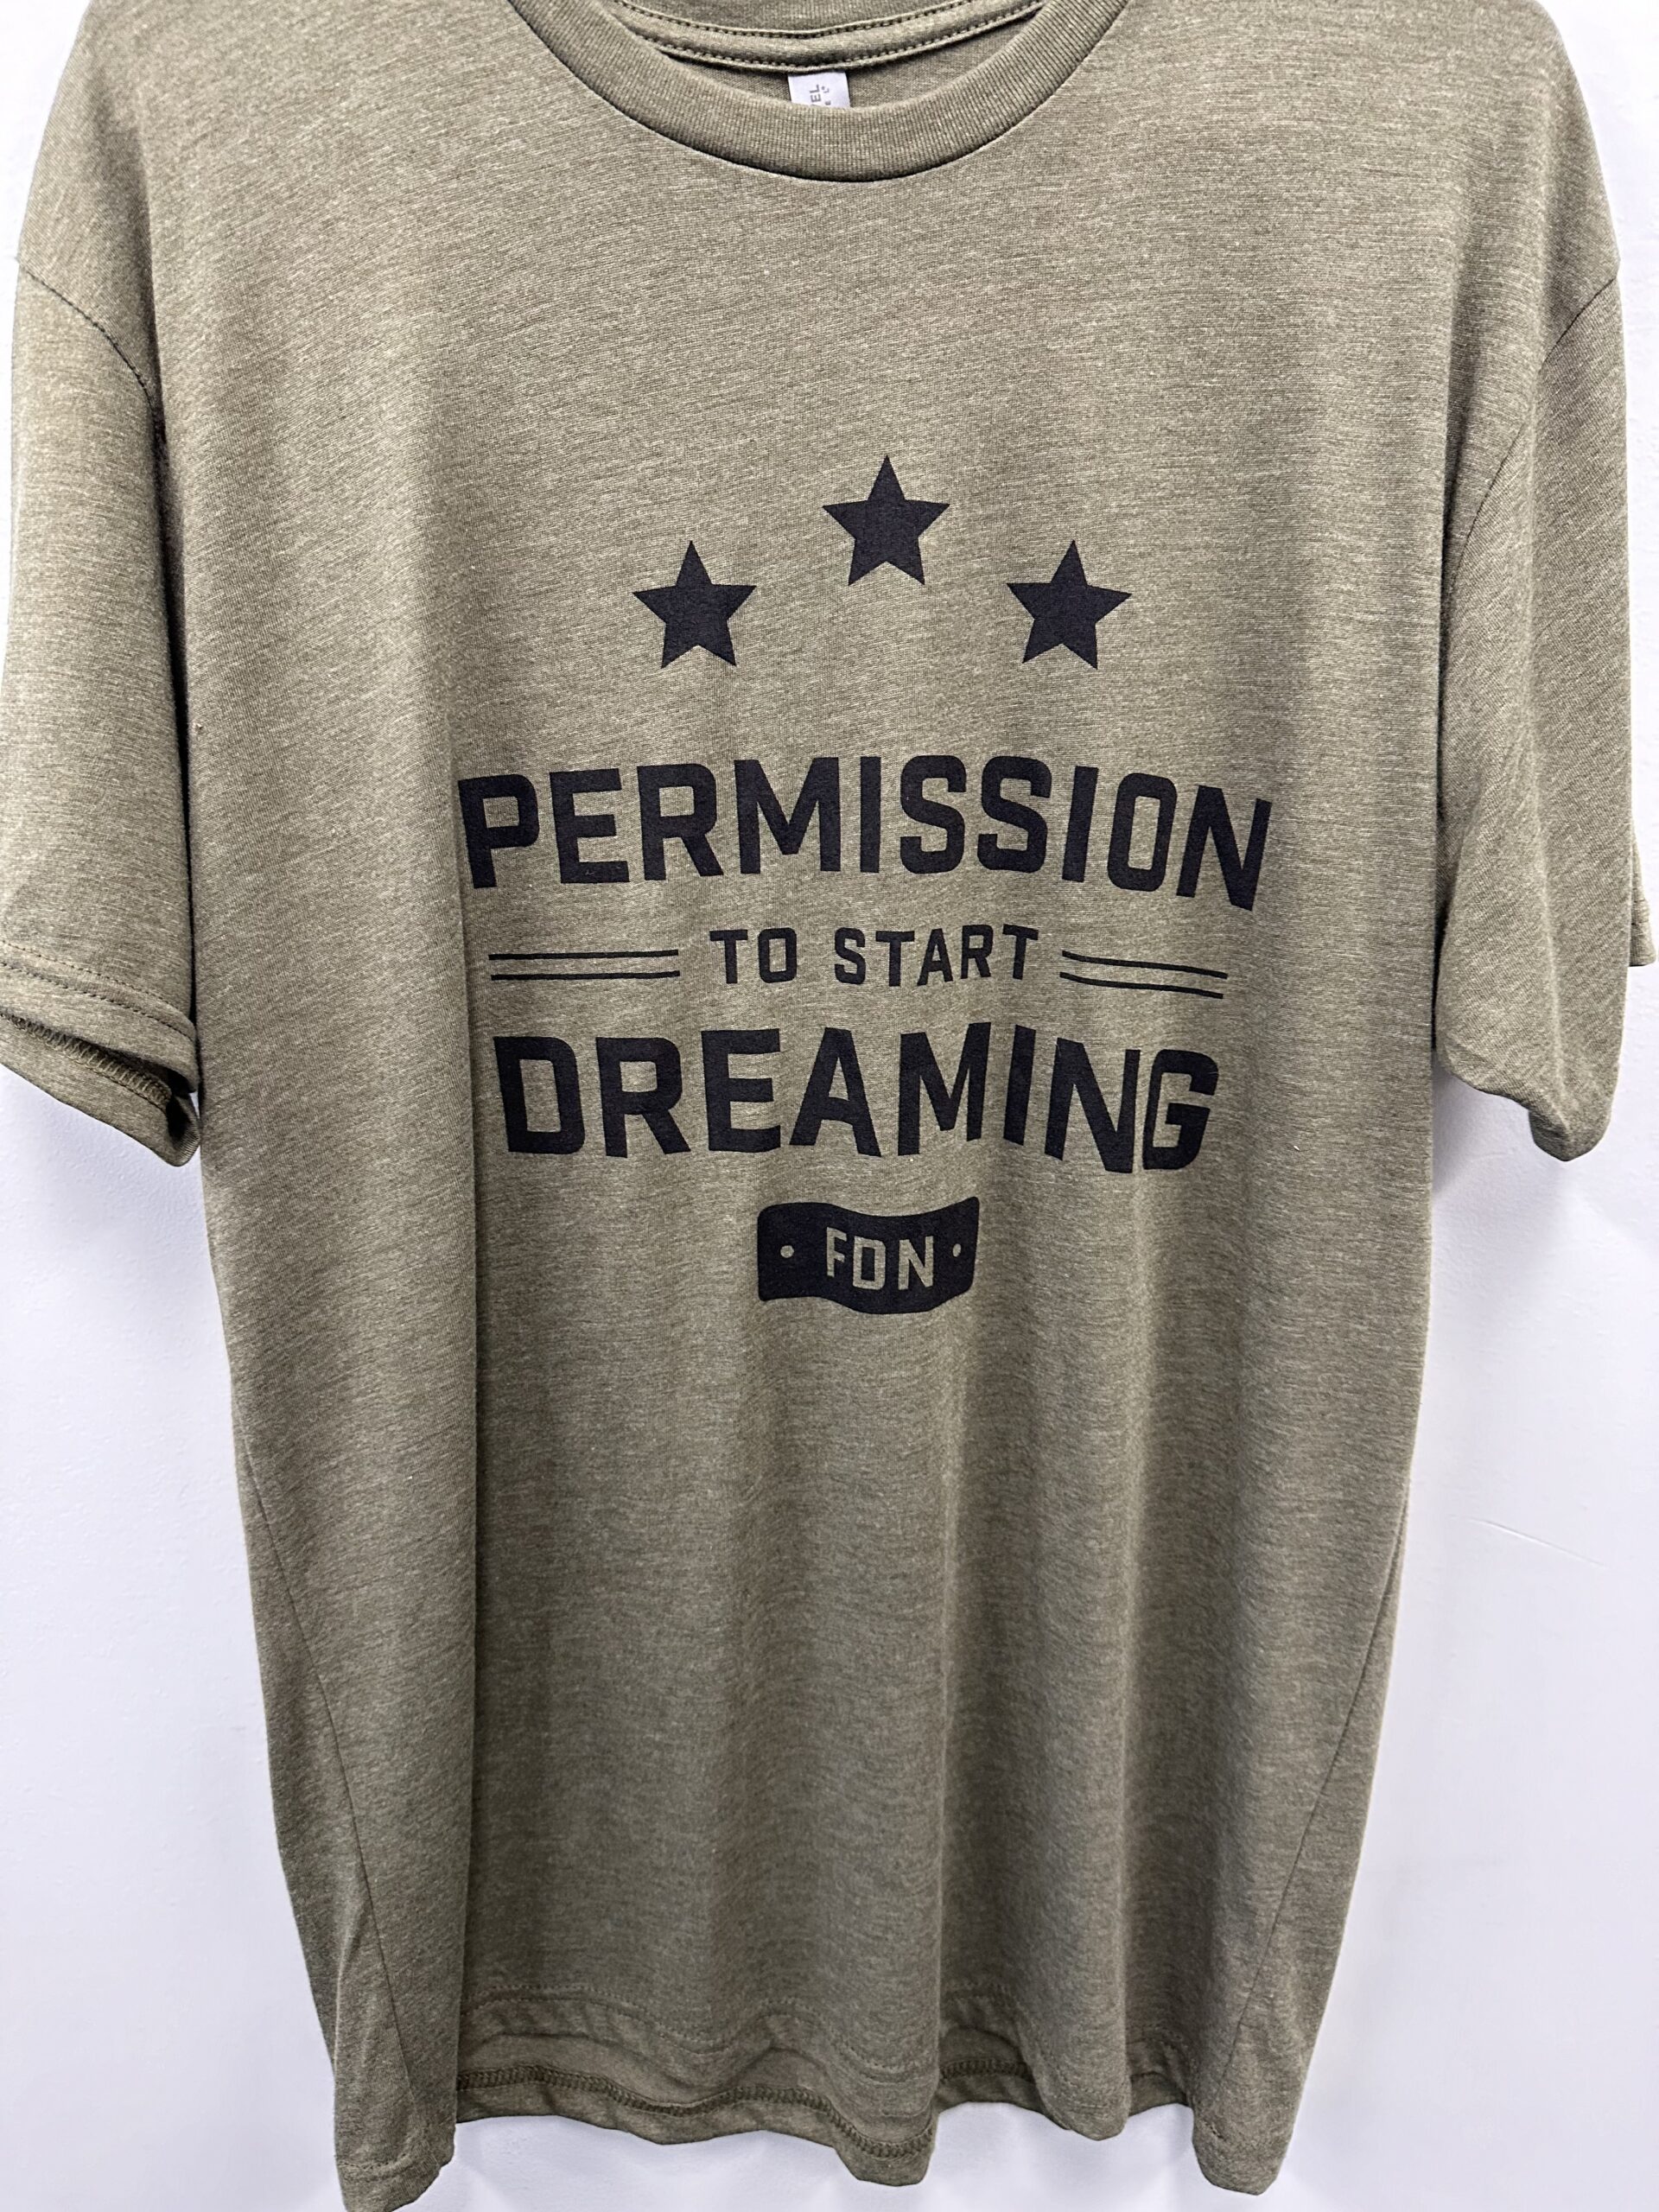 PTSDF Short Sleeve Tee Shirt – Permission To Start Dreaming Foundation